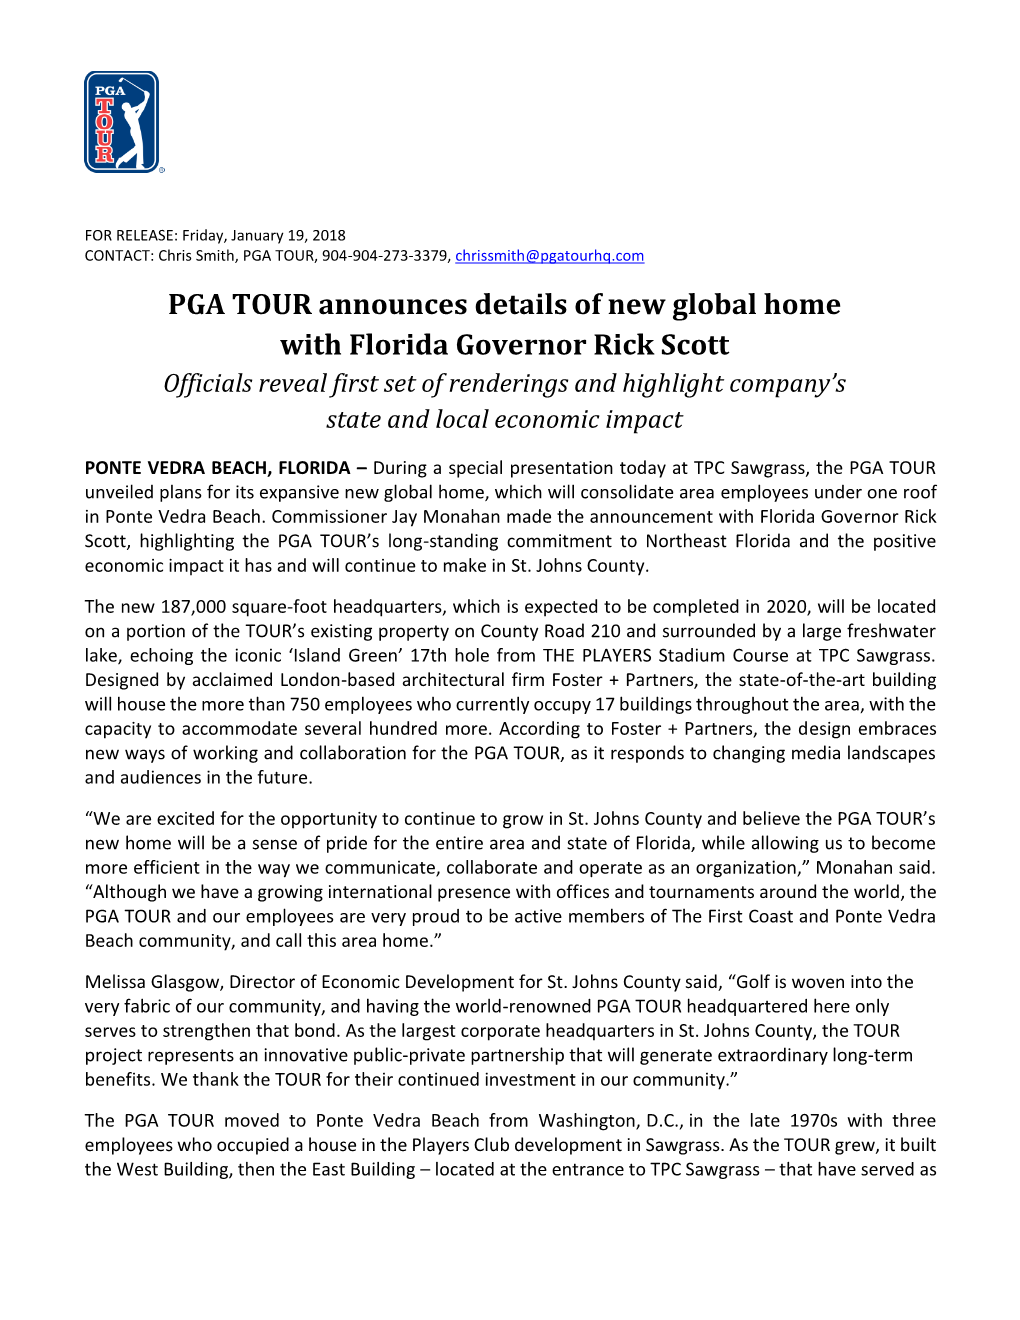 PGA TOUR Announces Details of New Global Home with Florida Governor